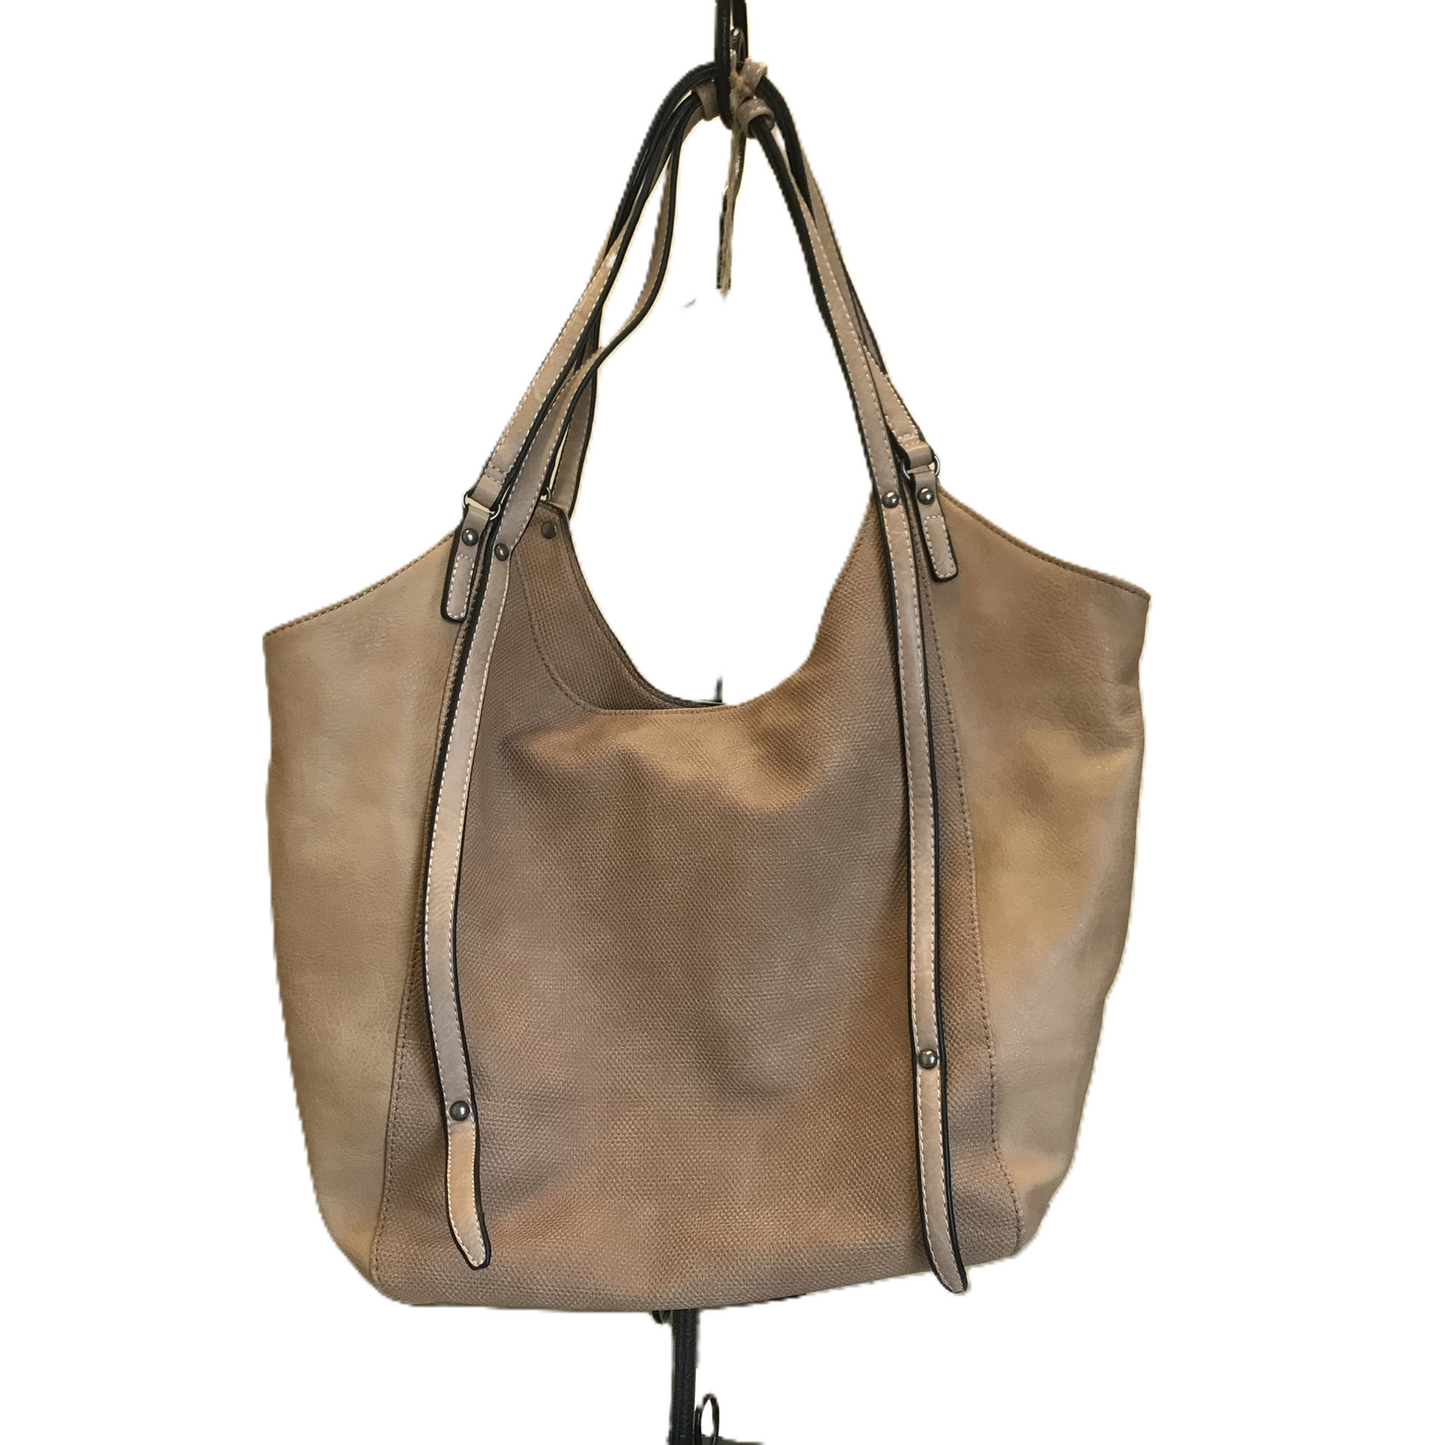 Handbag By Chilix, Size: Large